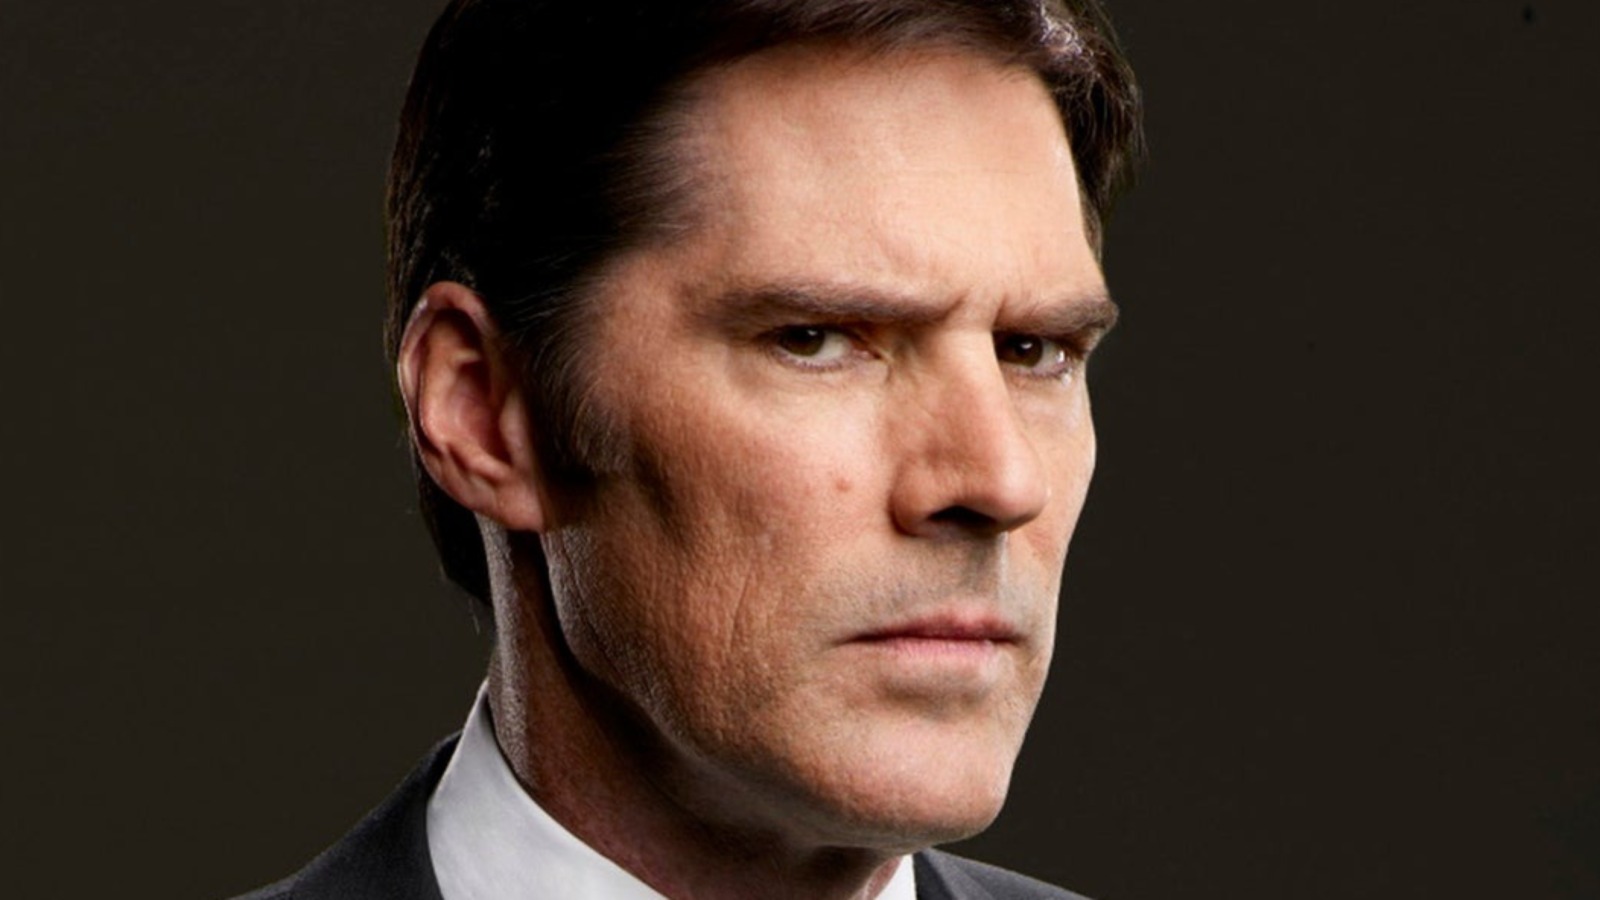 Gibson played Aaron "Hotch" Hotchner on the popular criminal drama